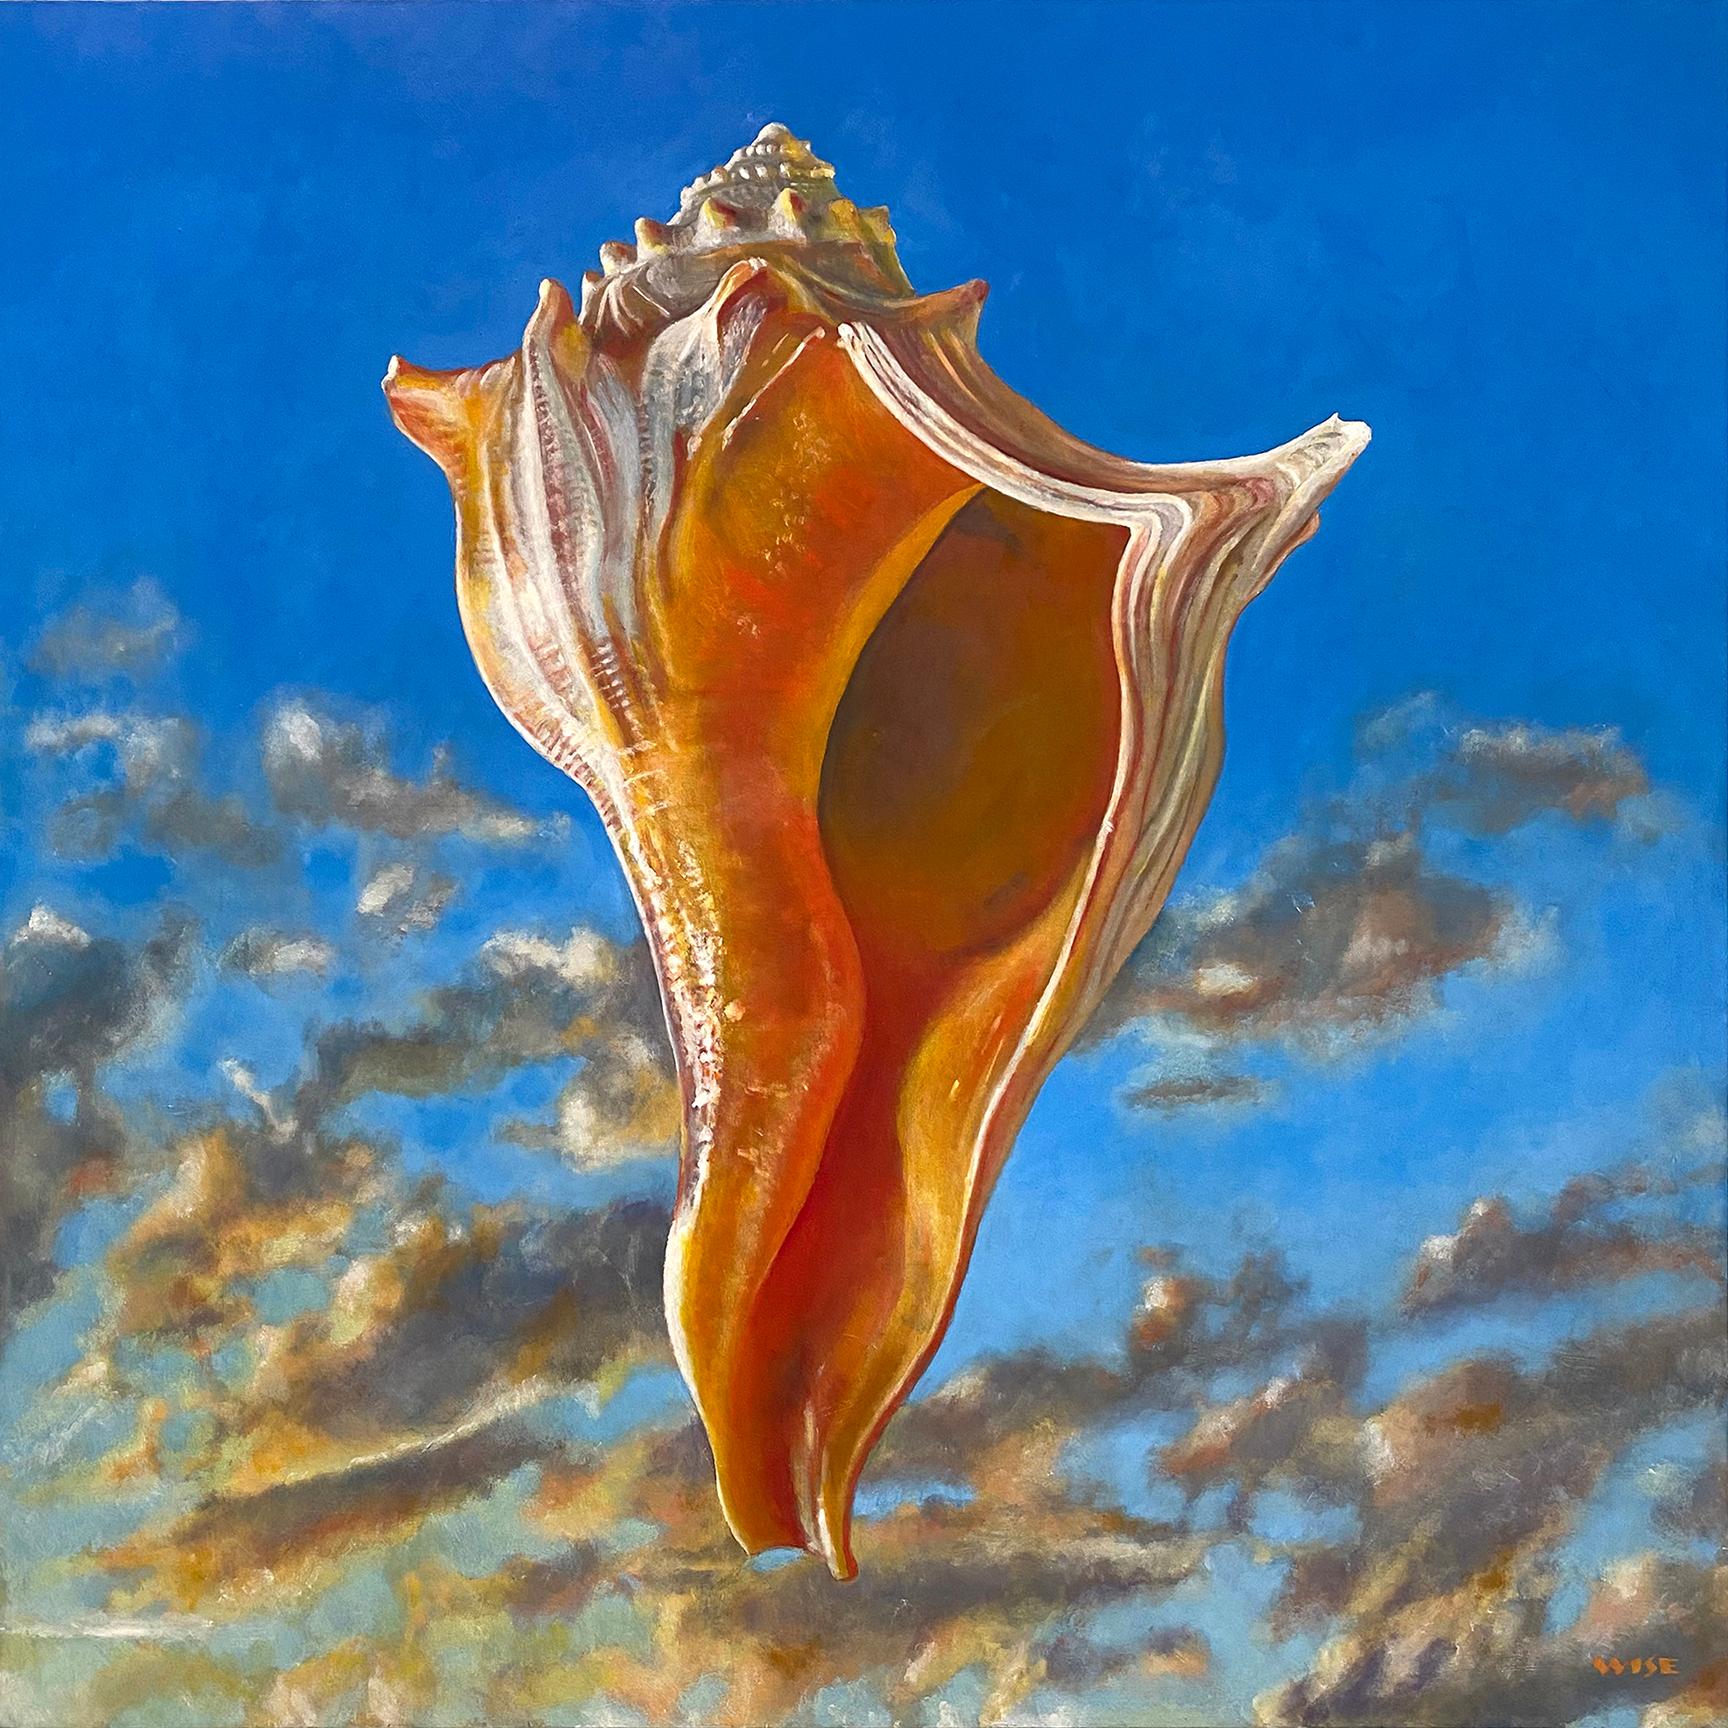 "Arcanum" - shell painting - skyscape - realism - Georgia O'Keeffe